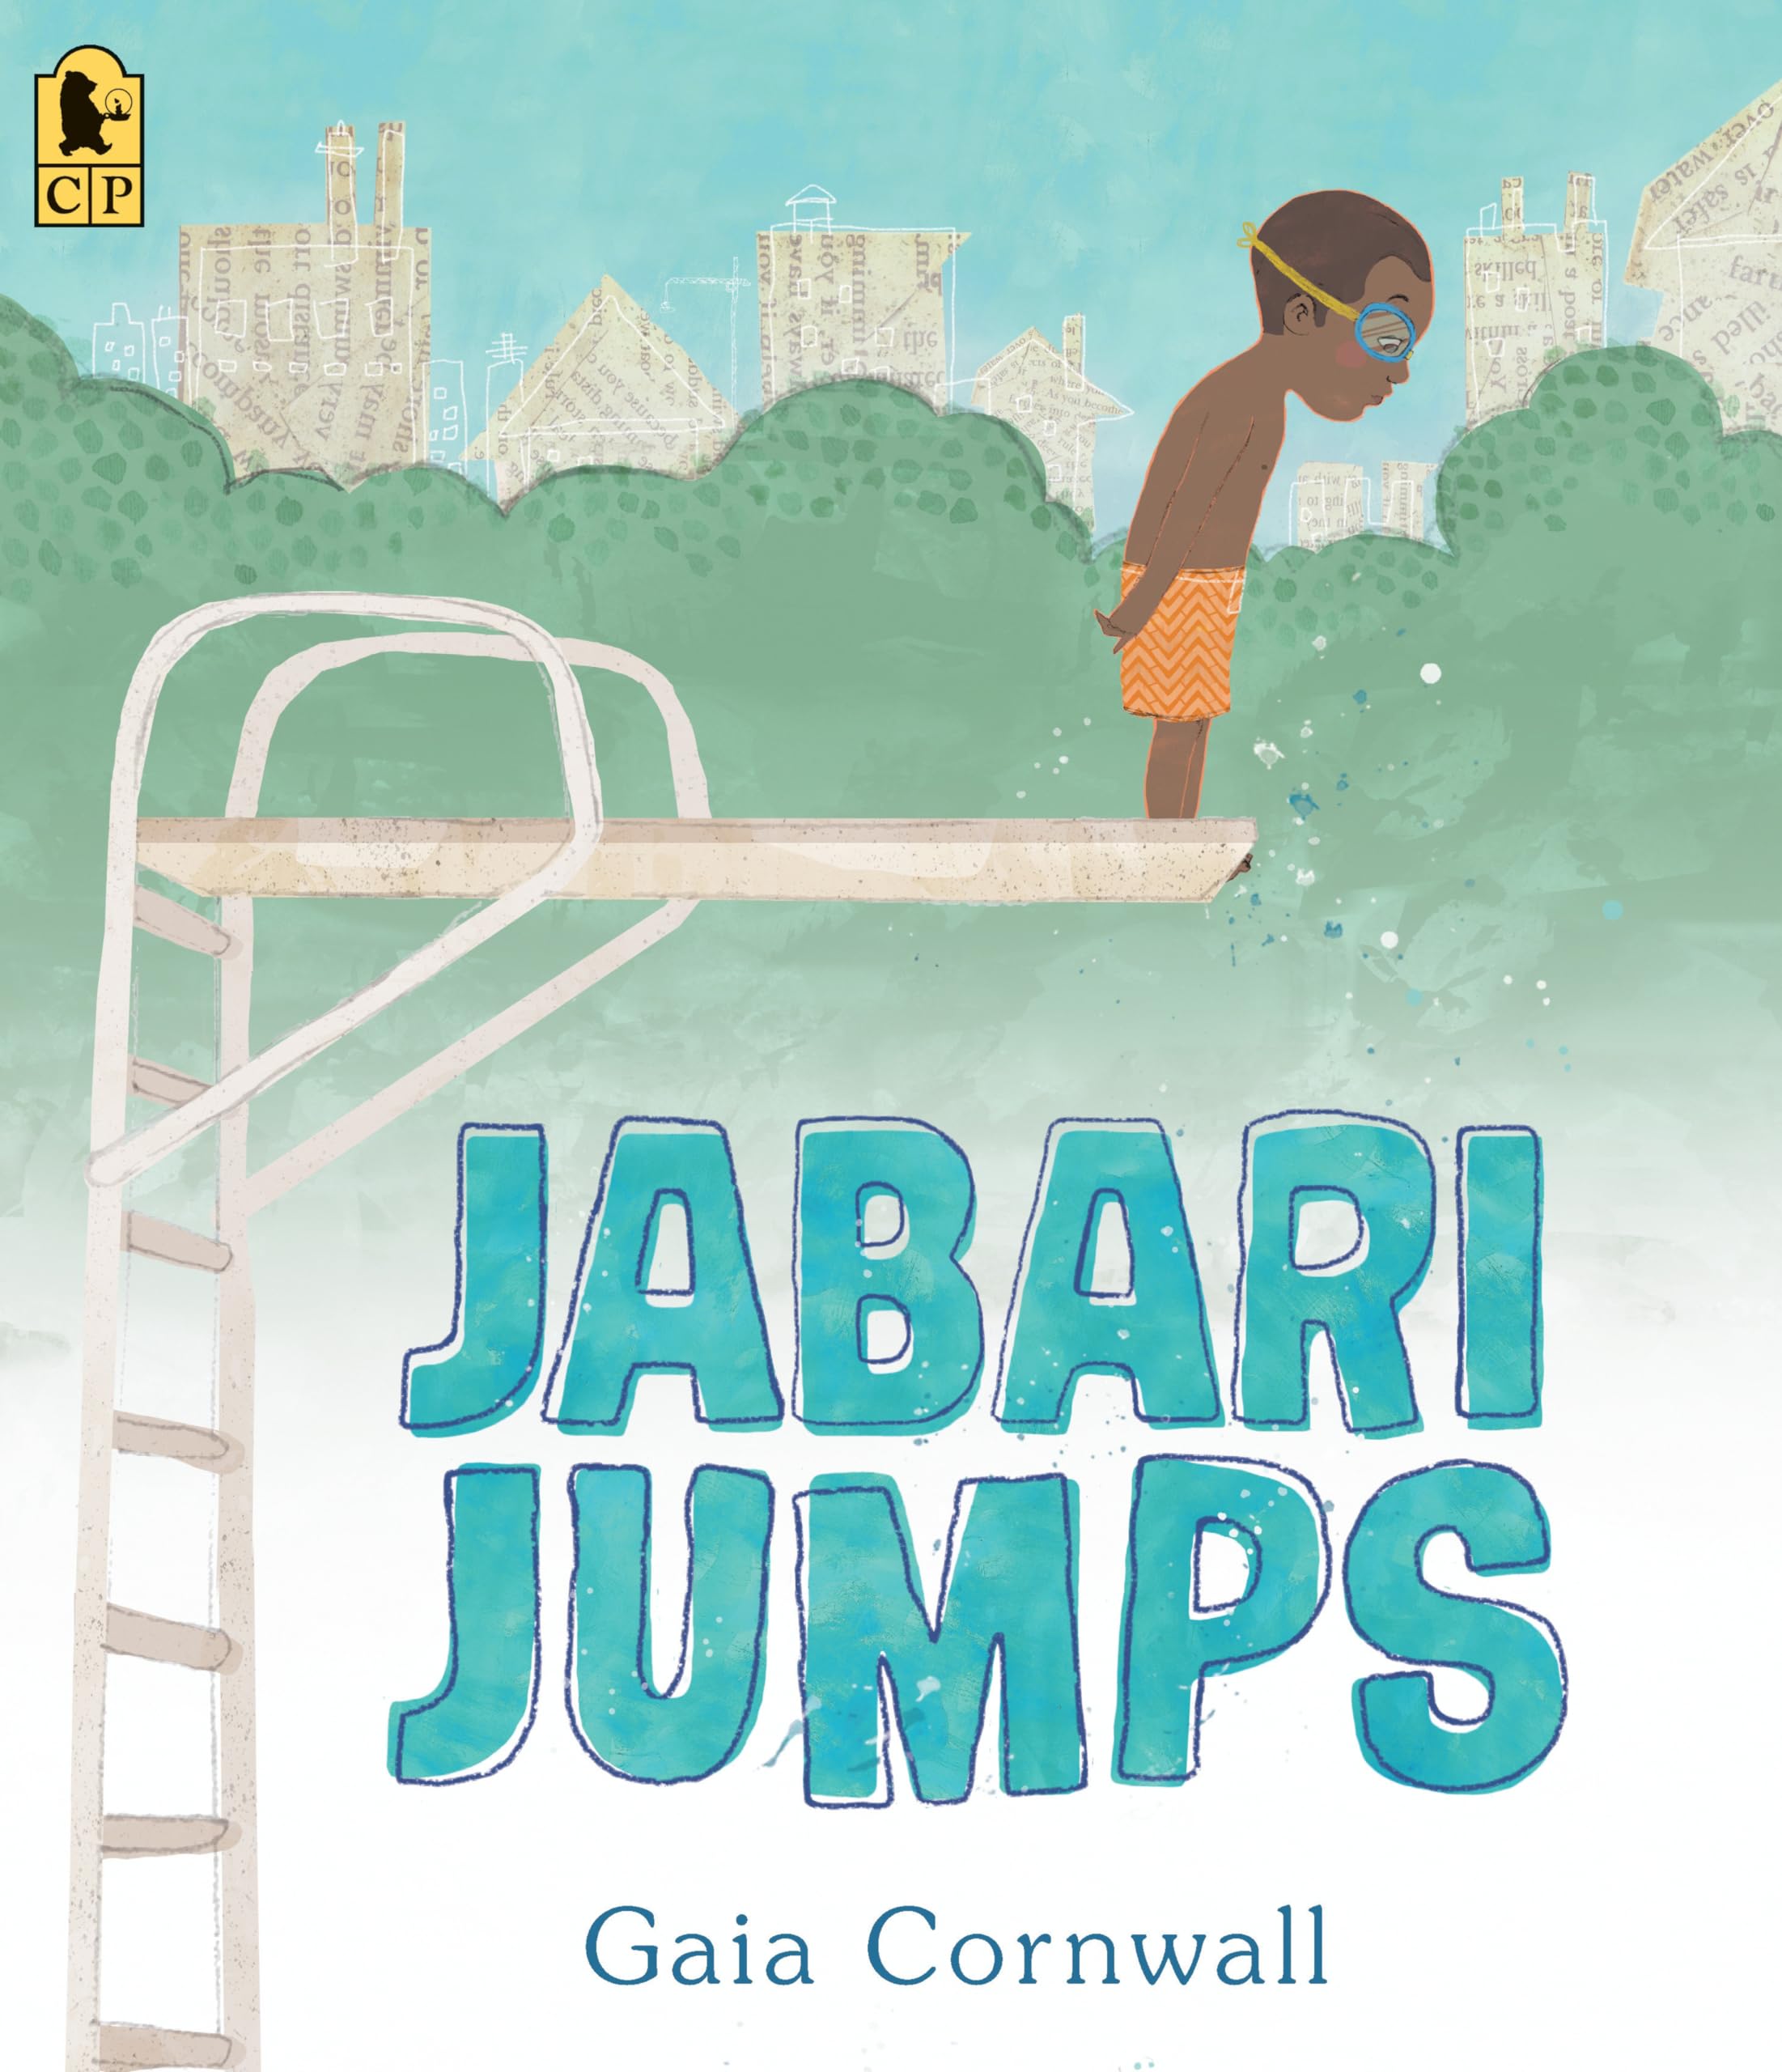 Jabari Jumps by Cornwall, Gaia